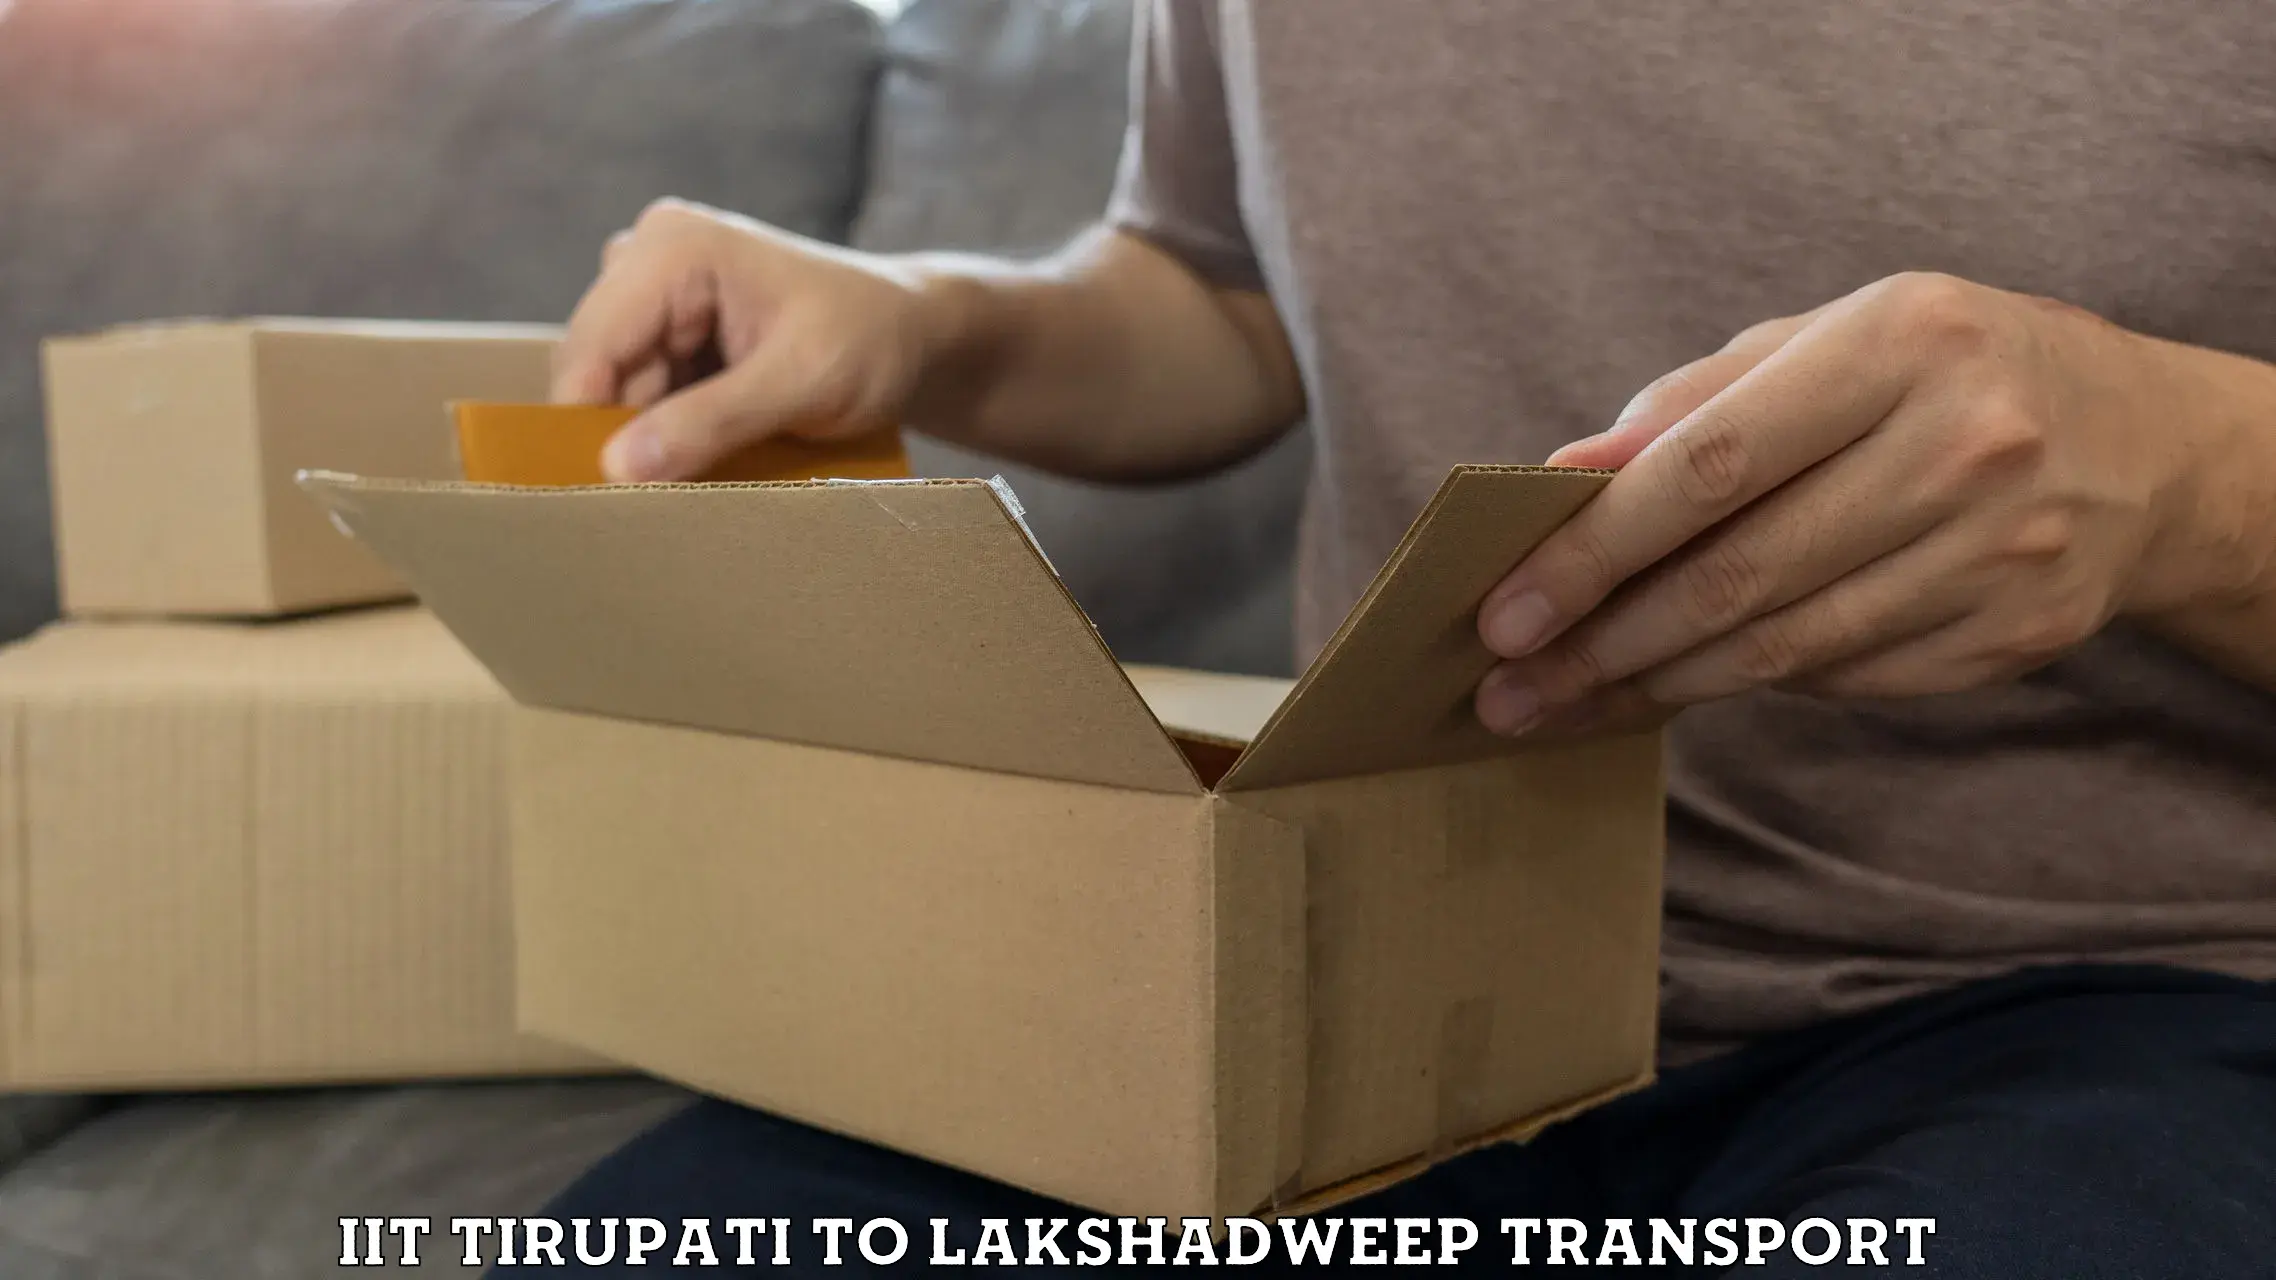 Online transport service IIT Tirupati to Lakshadweep